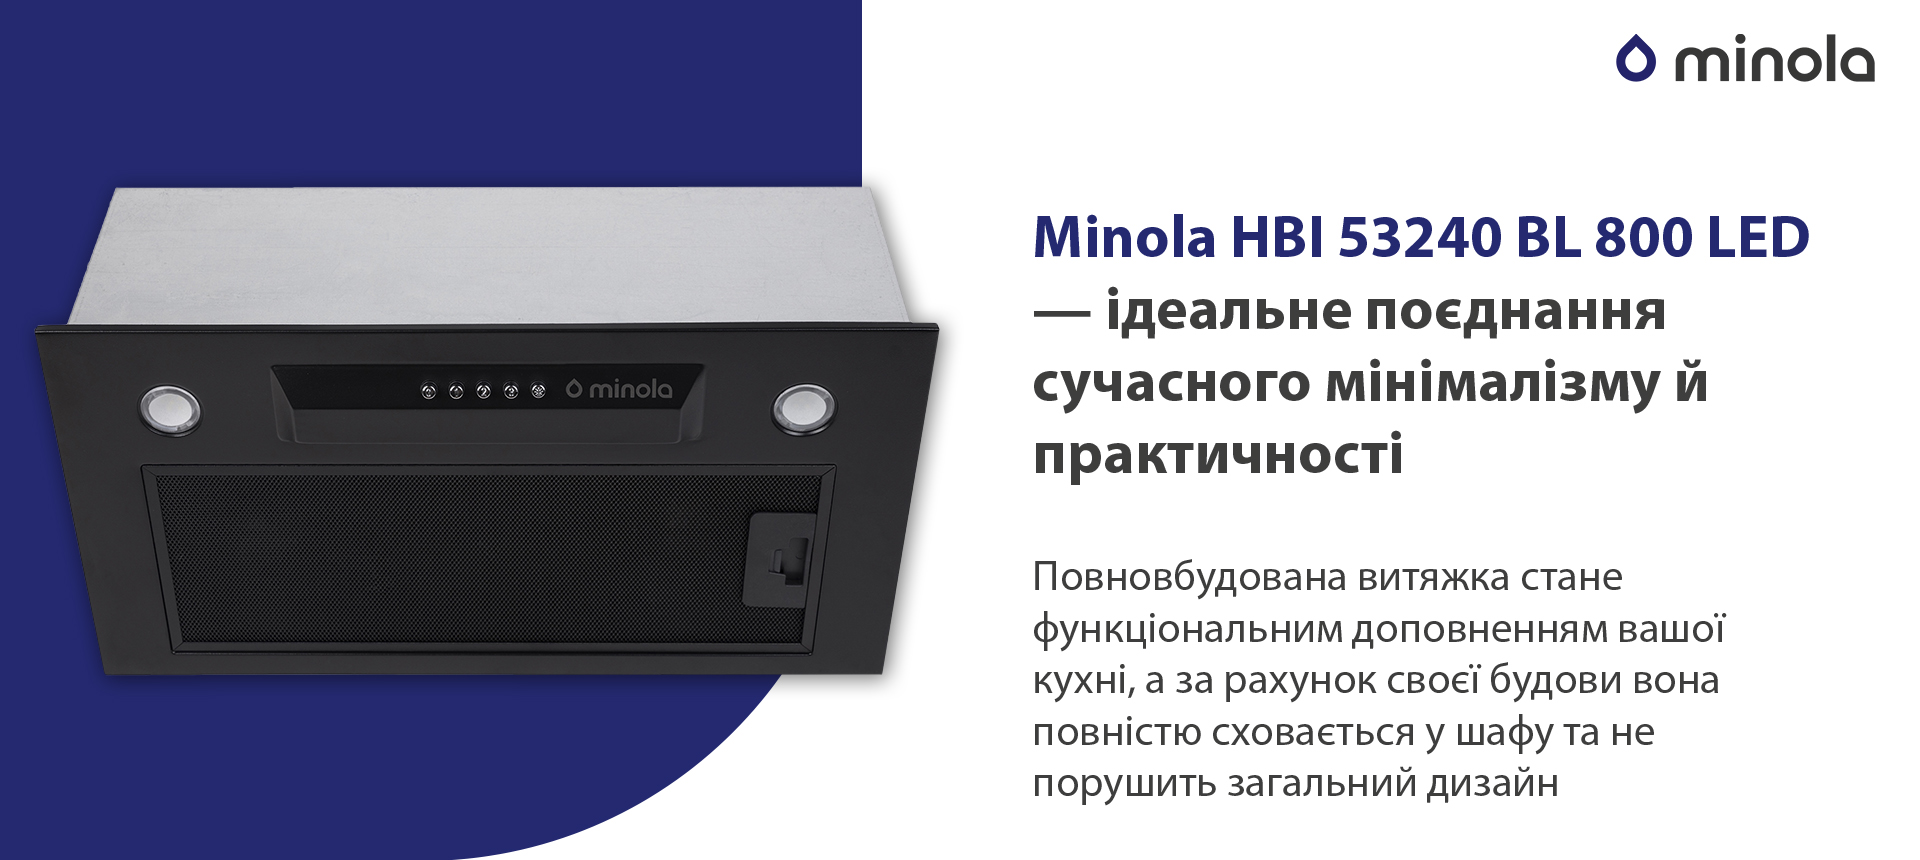 Minola HBI 53240 BL 800 LED в магазине в Киеве - фото 10